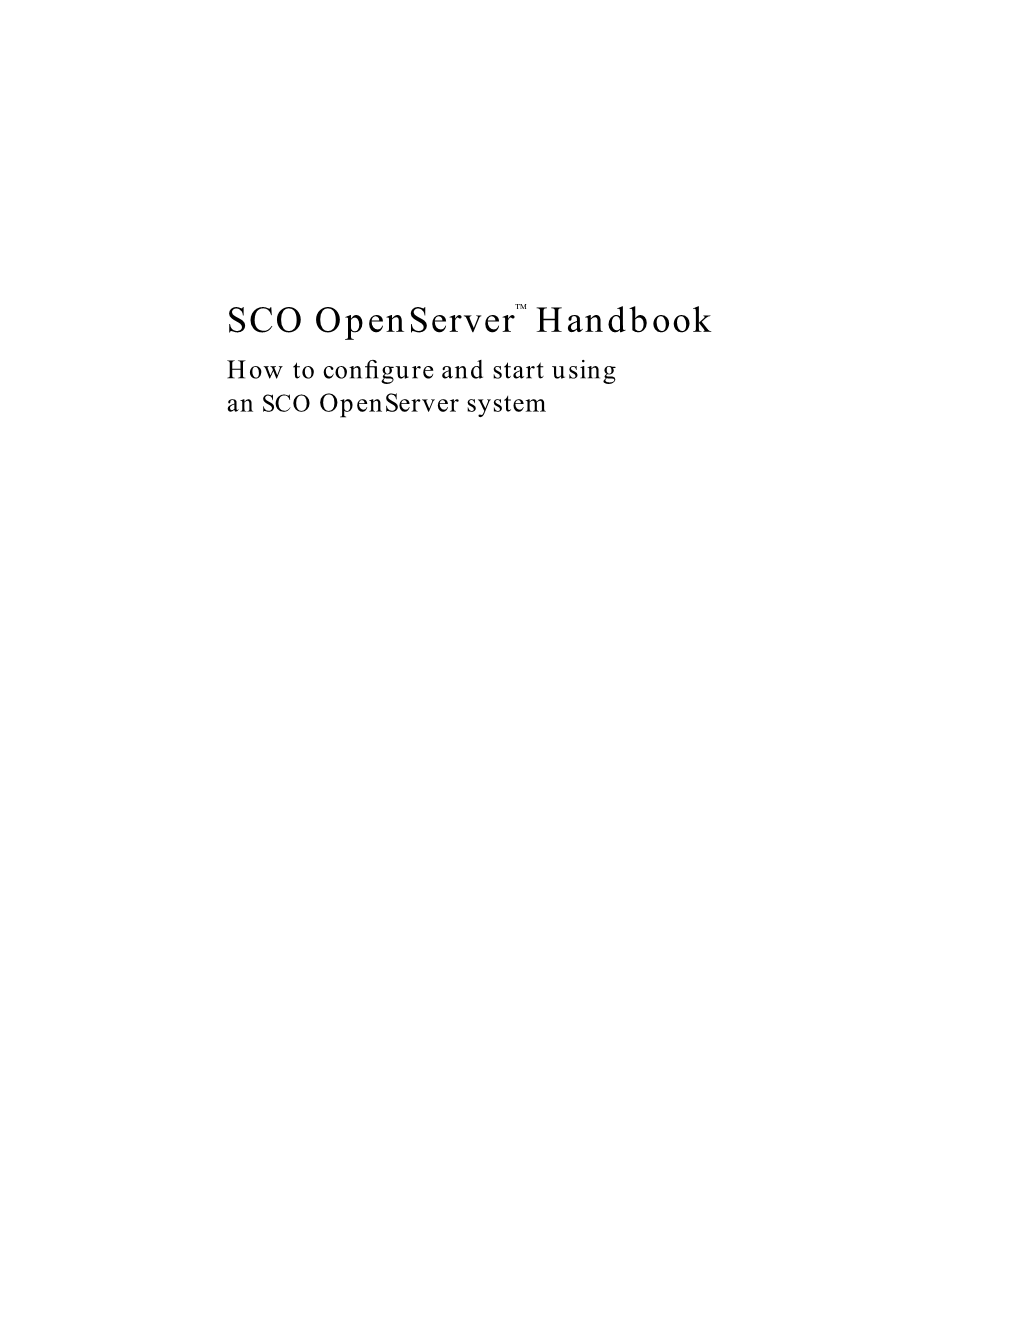 SCO Openserver Handbook Changing the Default Editor